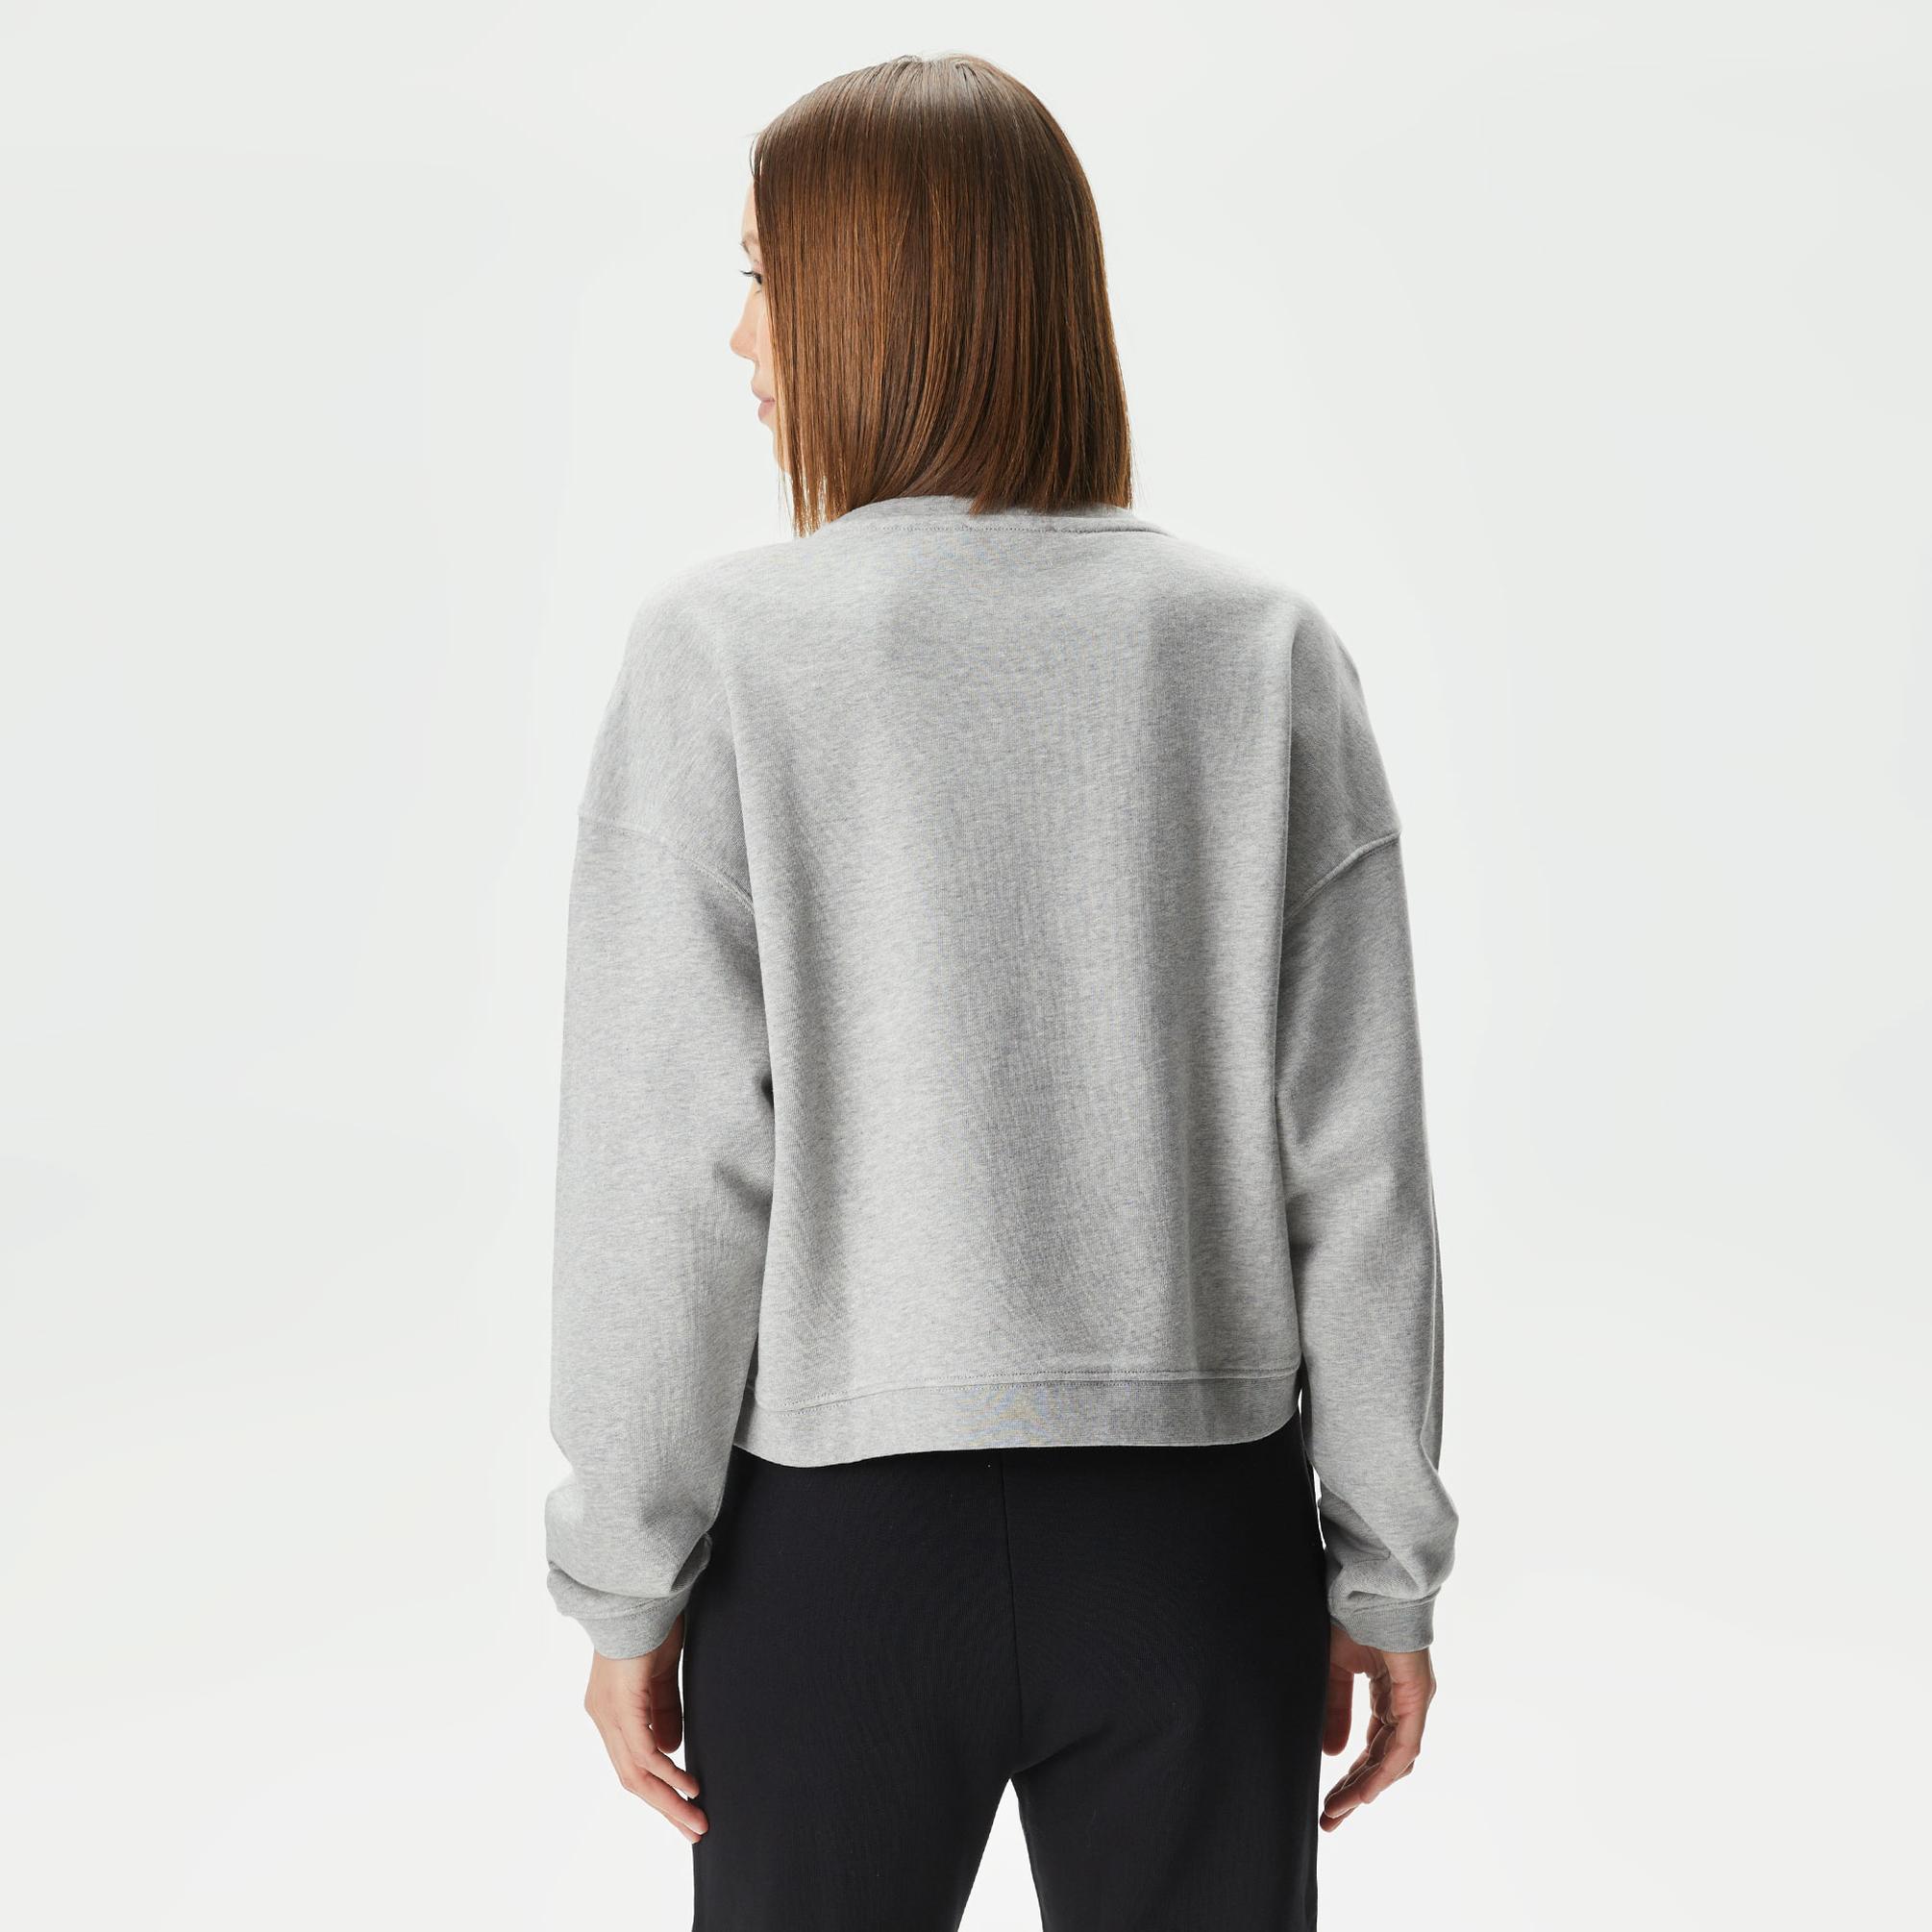  Les Benjamins Core Kadın Gri Sweatshirt